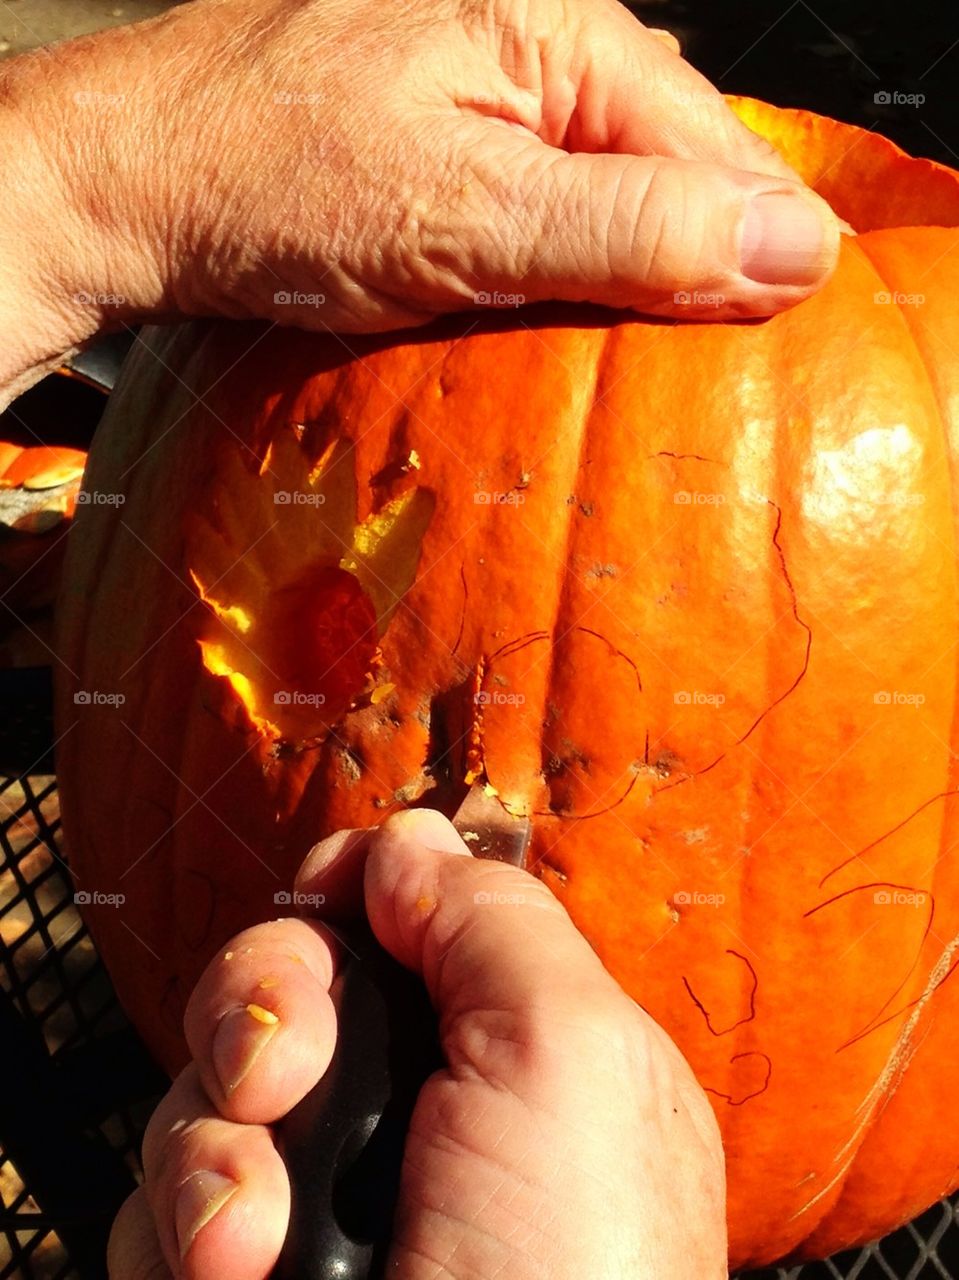 Man carving pumpkin